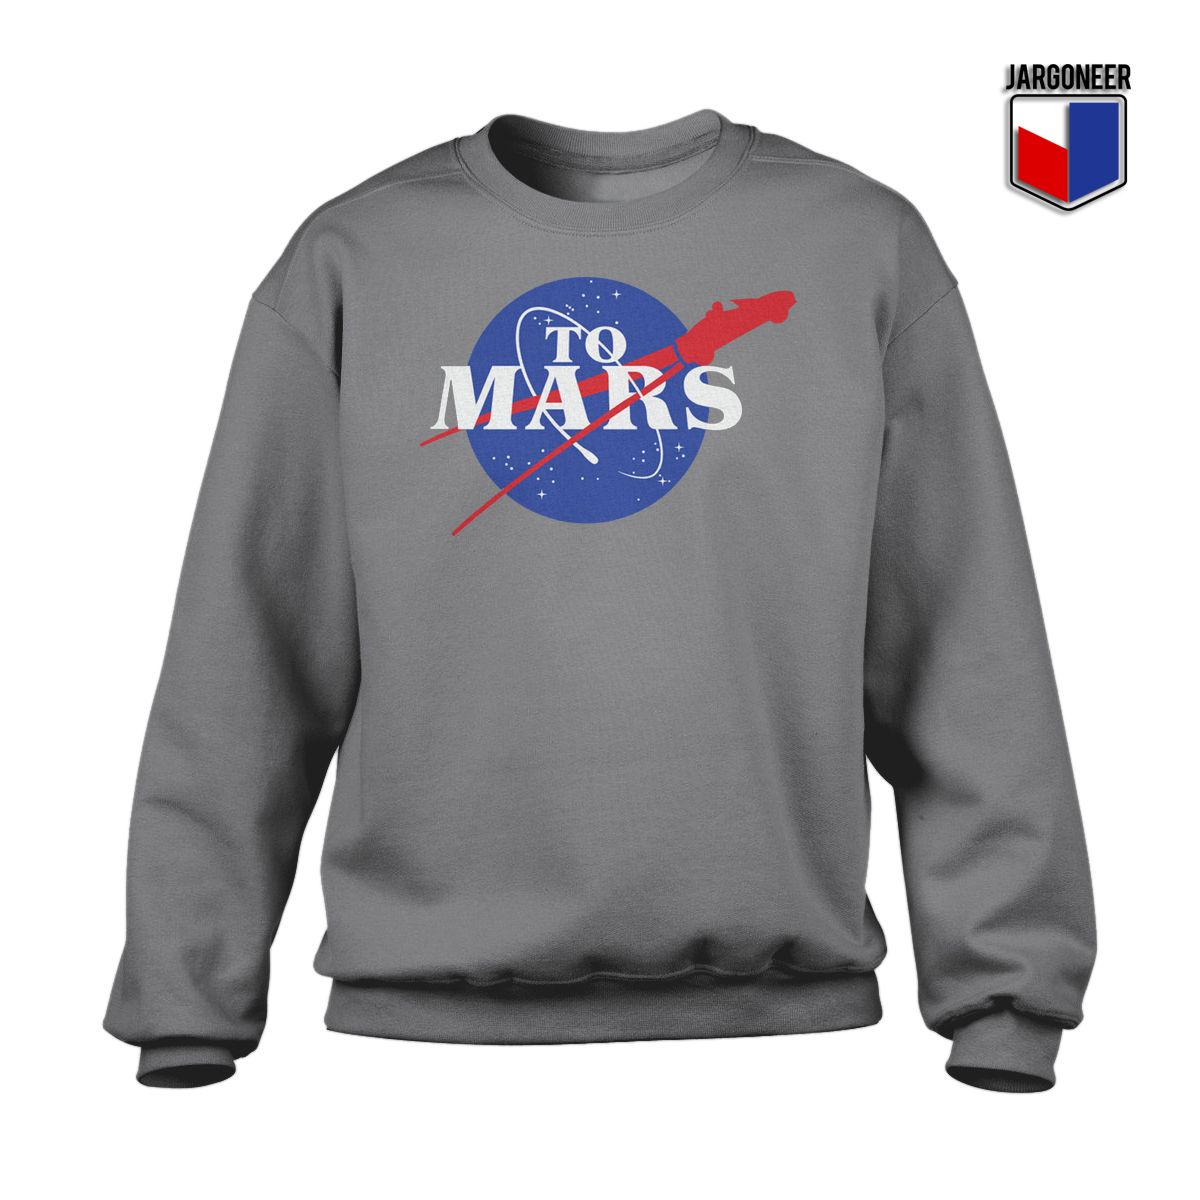 Cool NASA To Mars Unisex Sweatshirt Design - Shop Unique Graphic Cool Shirt Designs